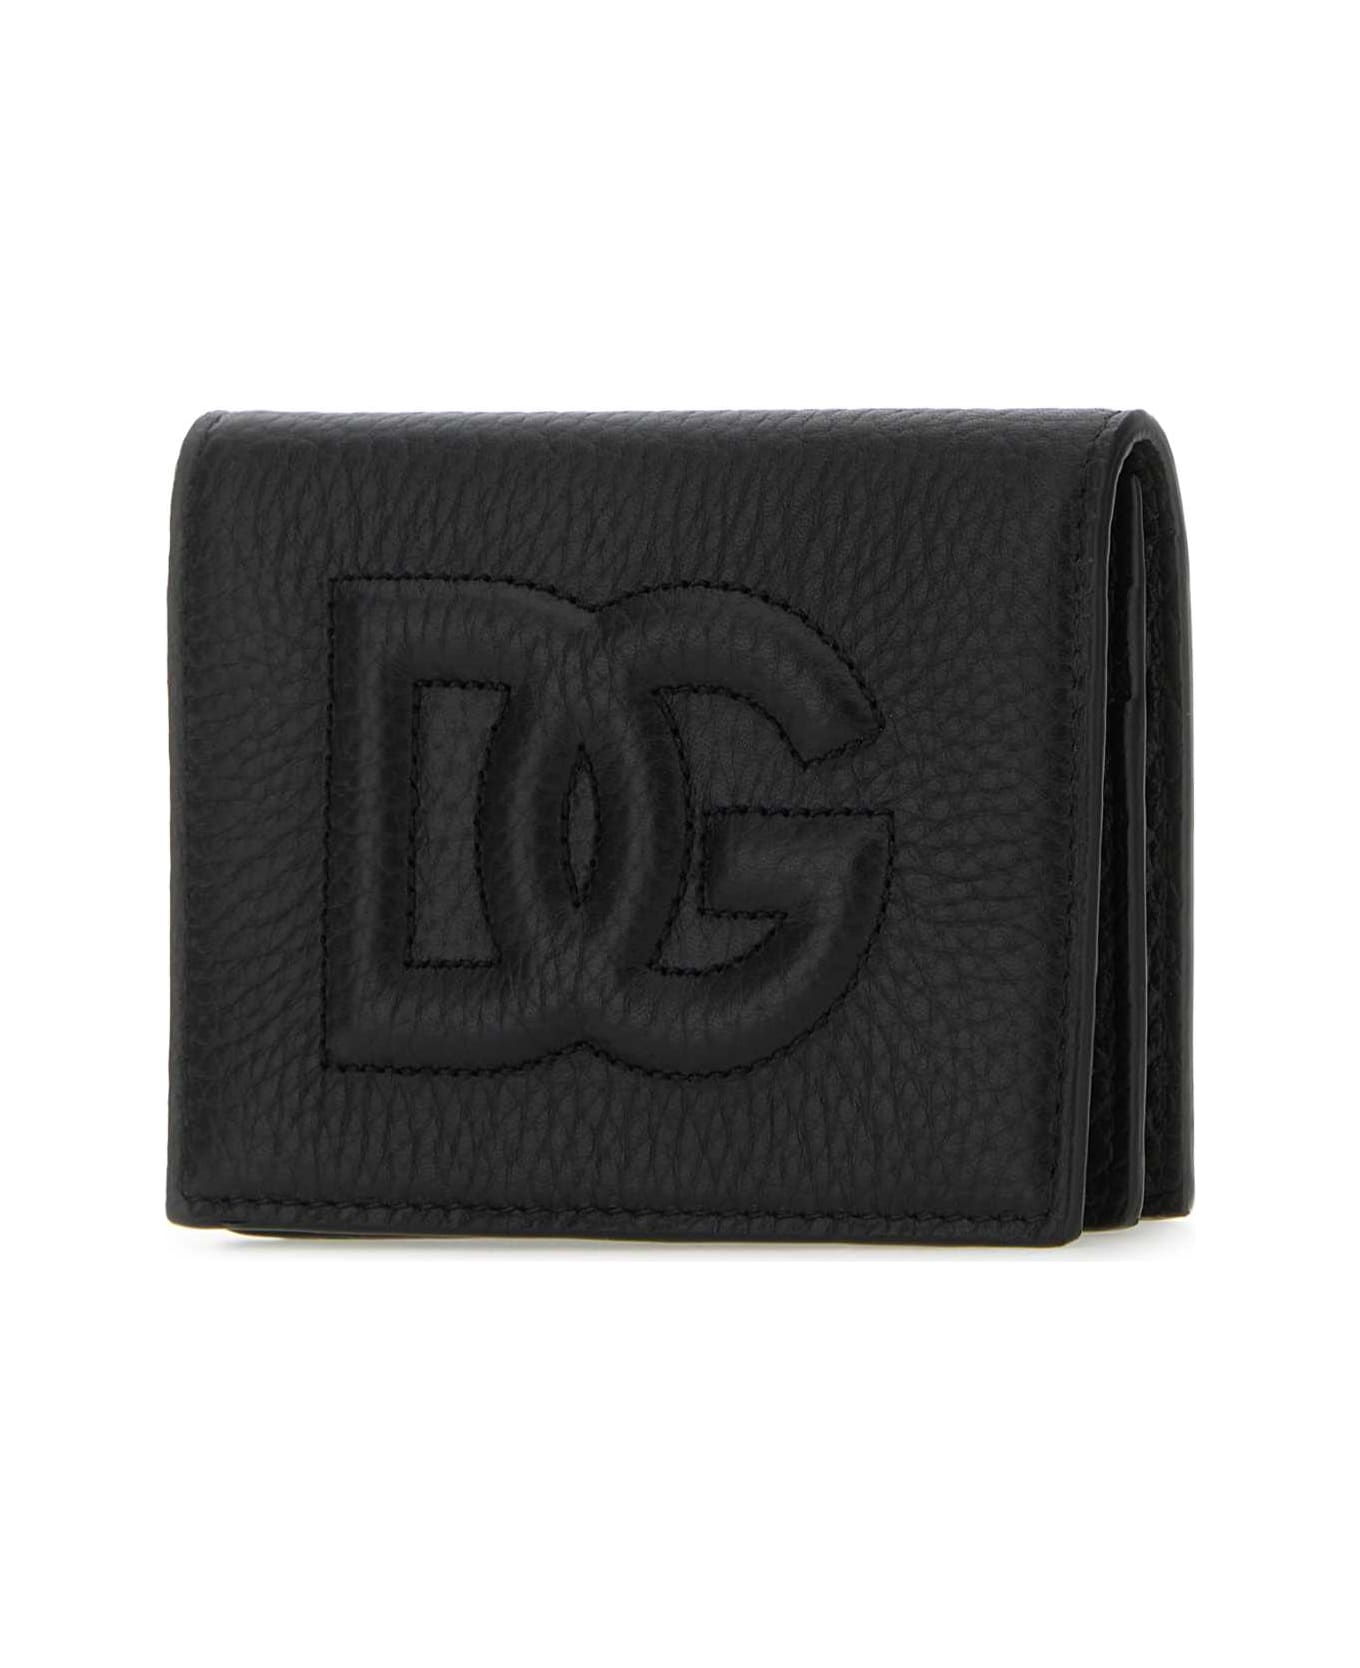 Dolce & Gabbana Black Leather Wallet - NERO